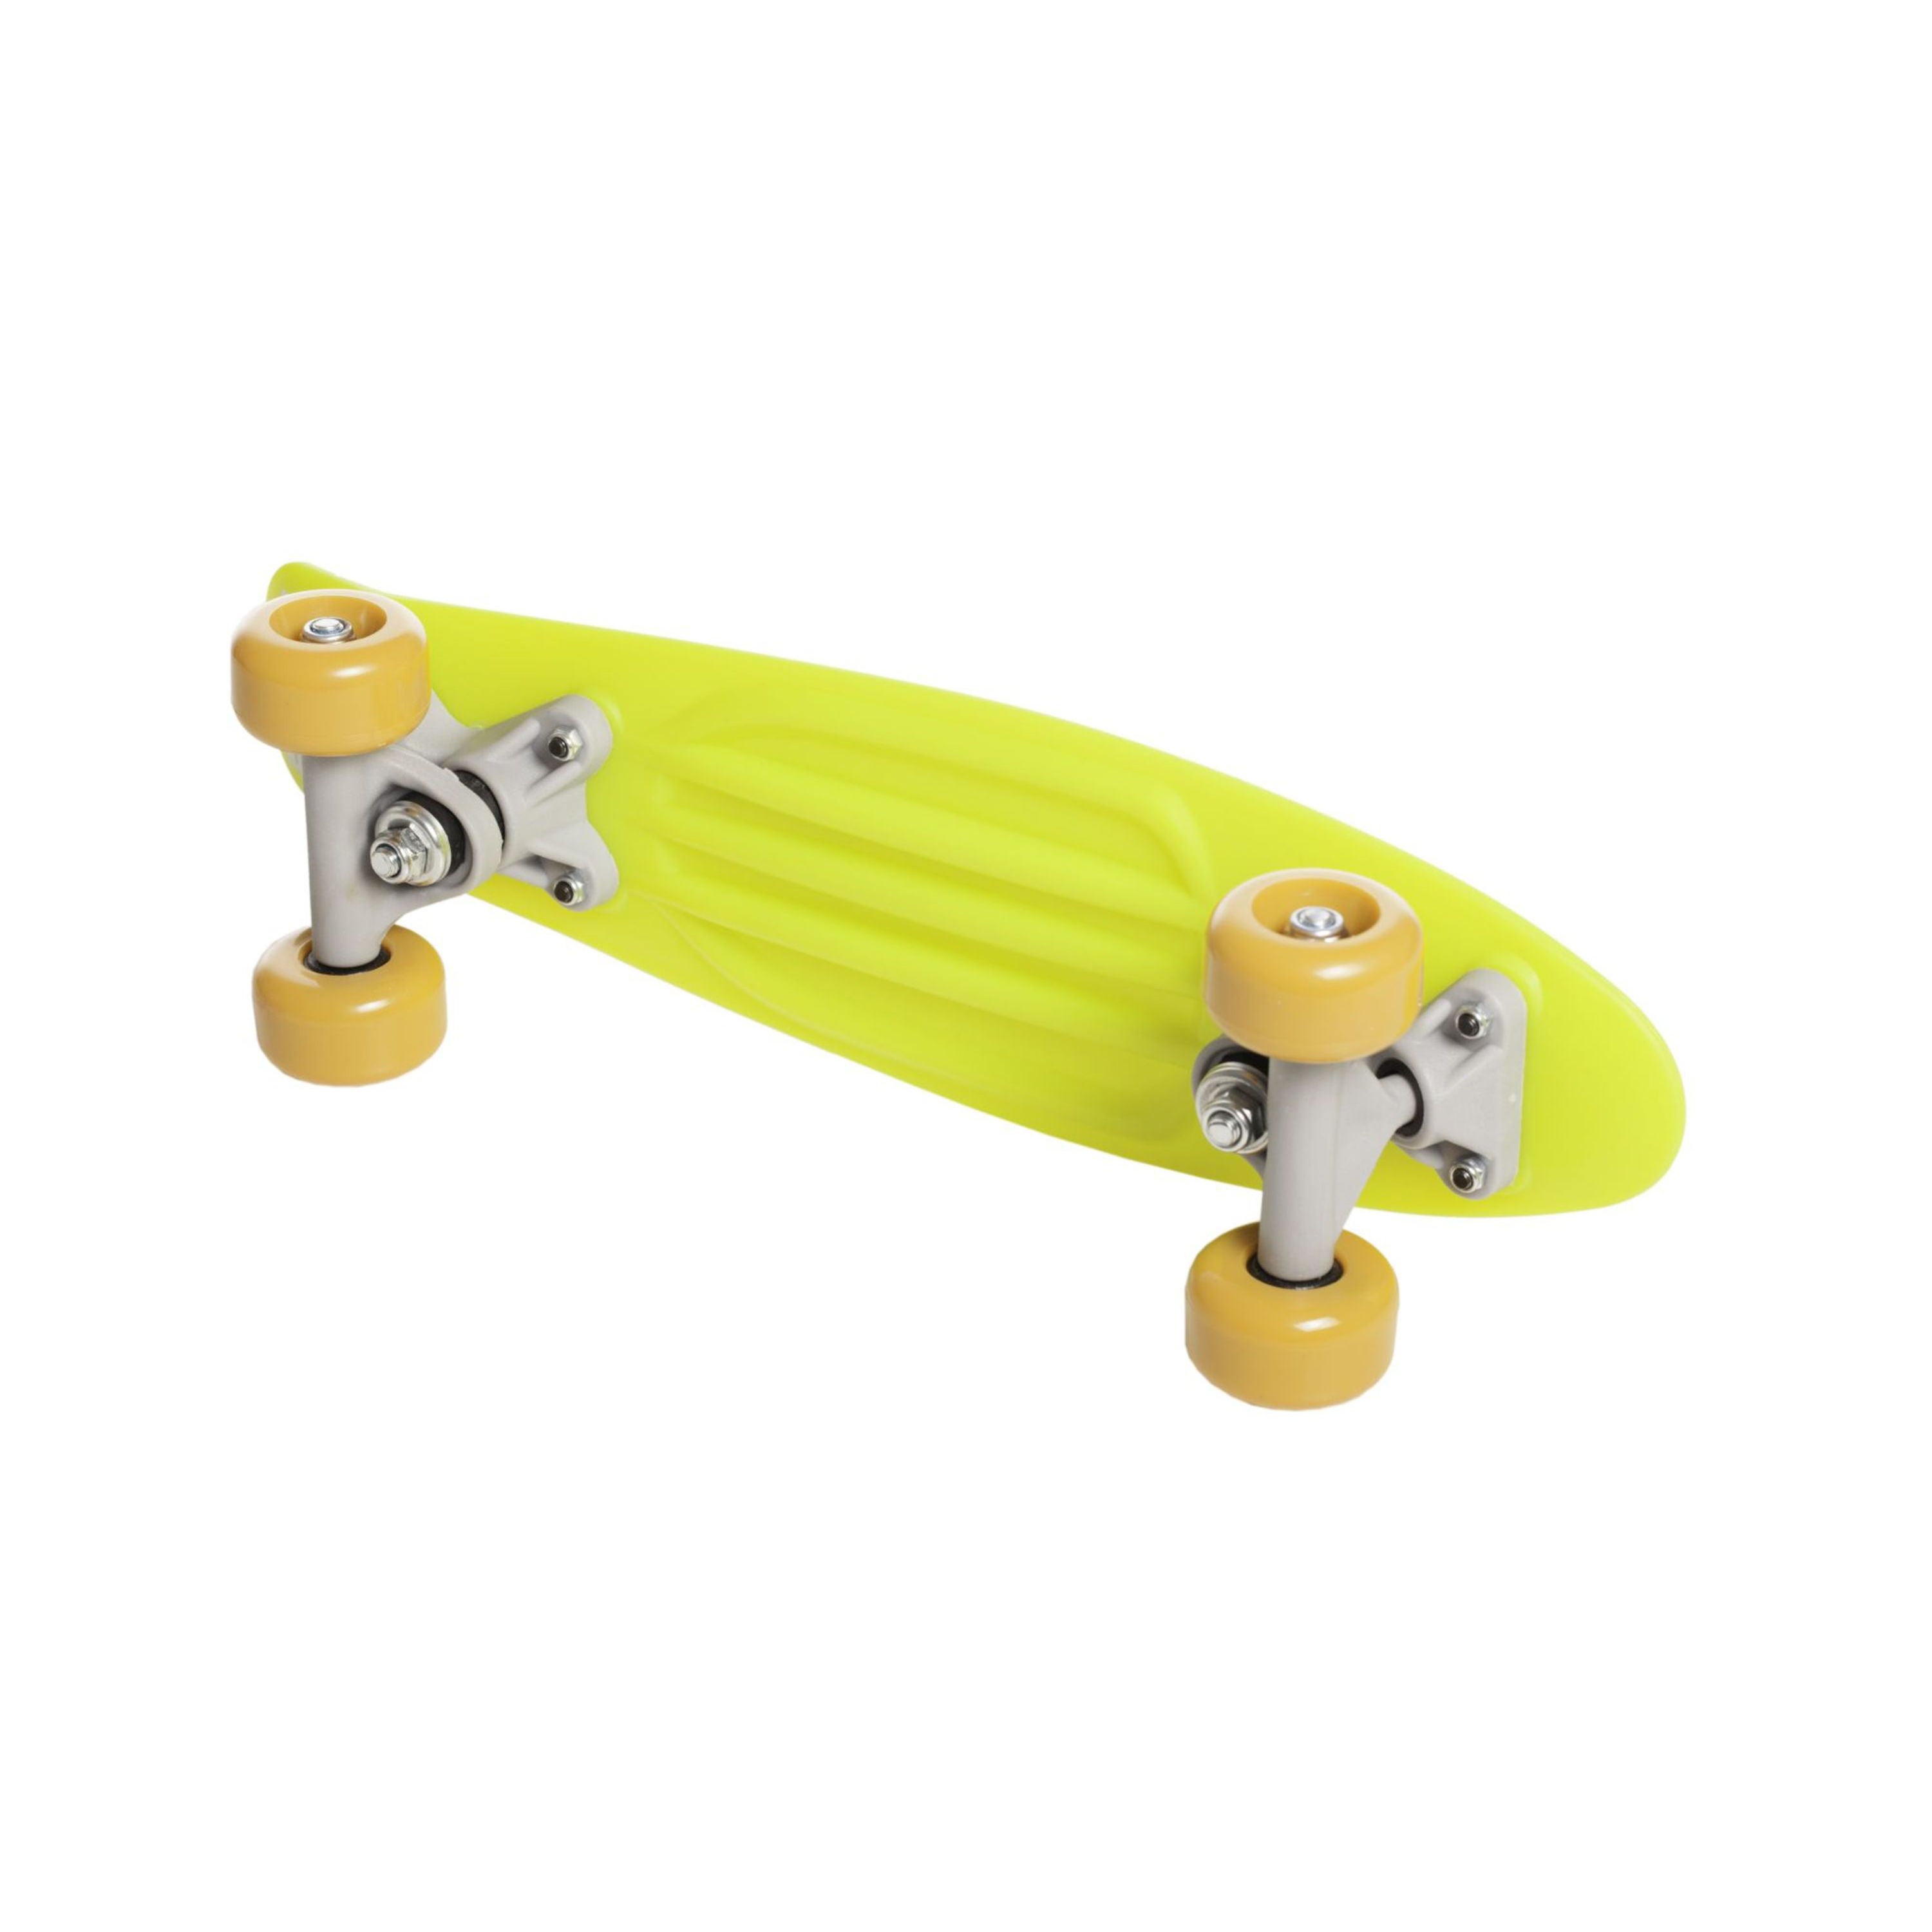 Skateboard Snap, plastic, diverse culori, 43 x 11 cm